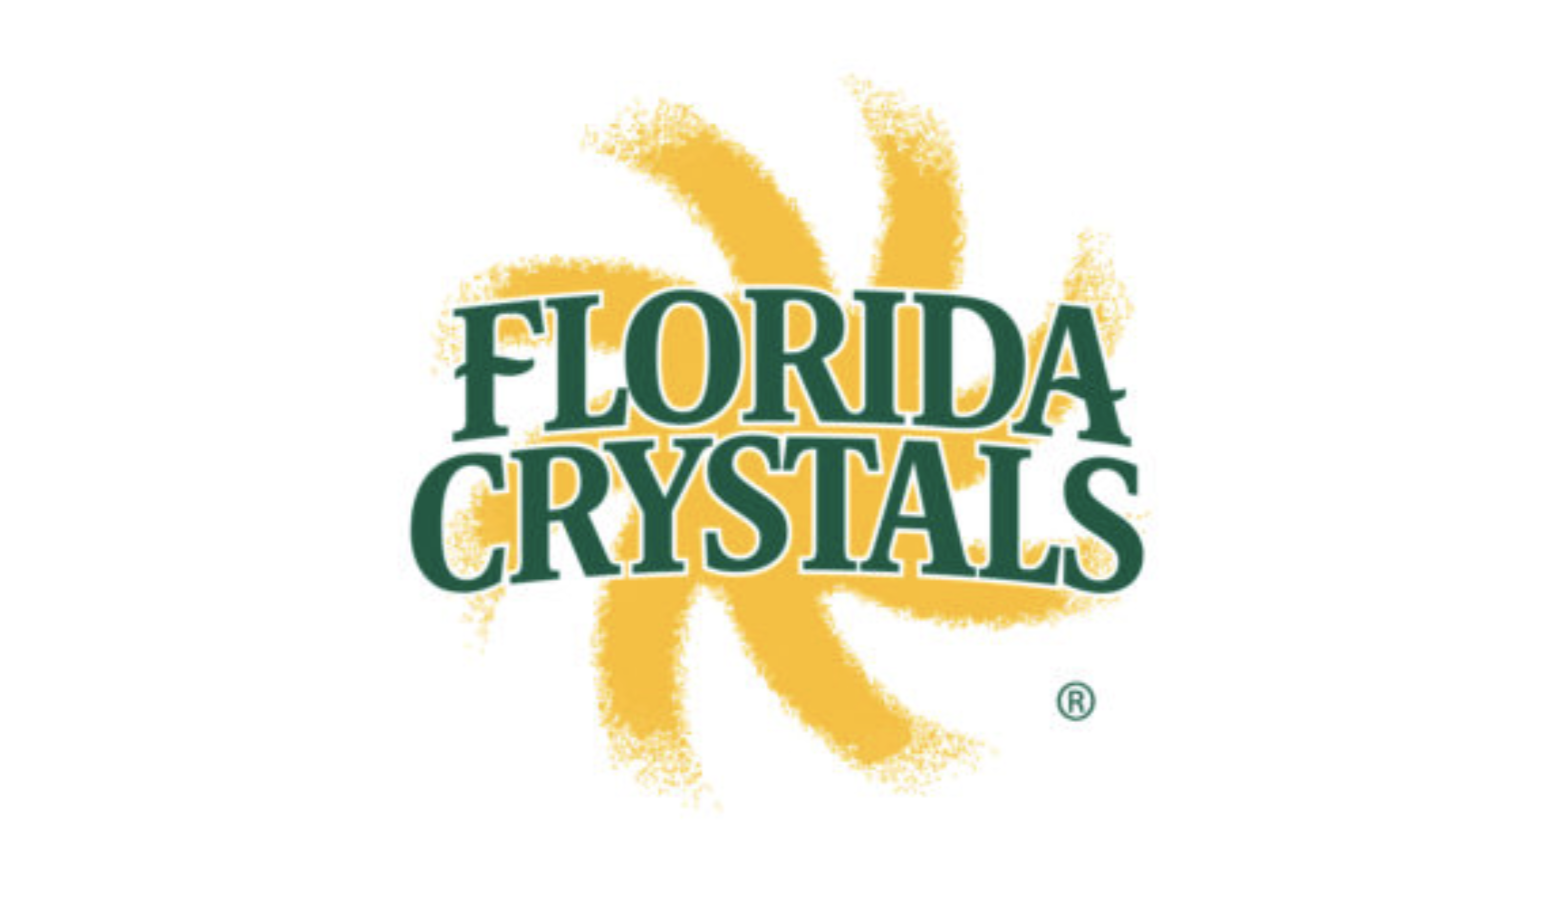 Florida crystals